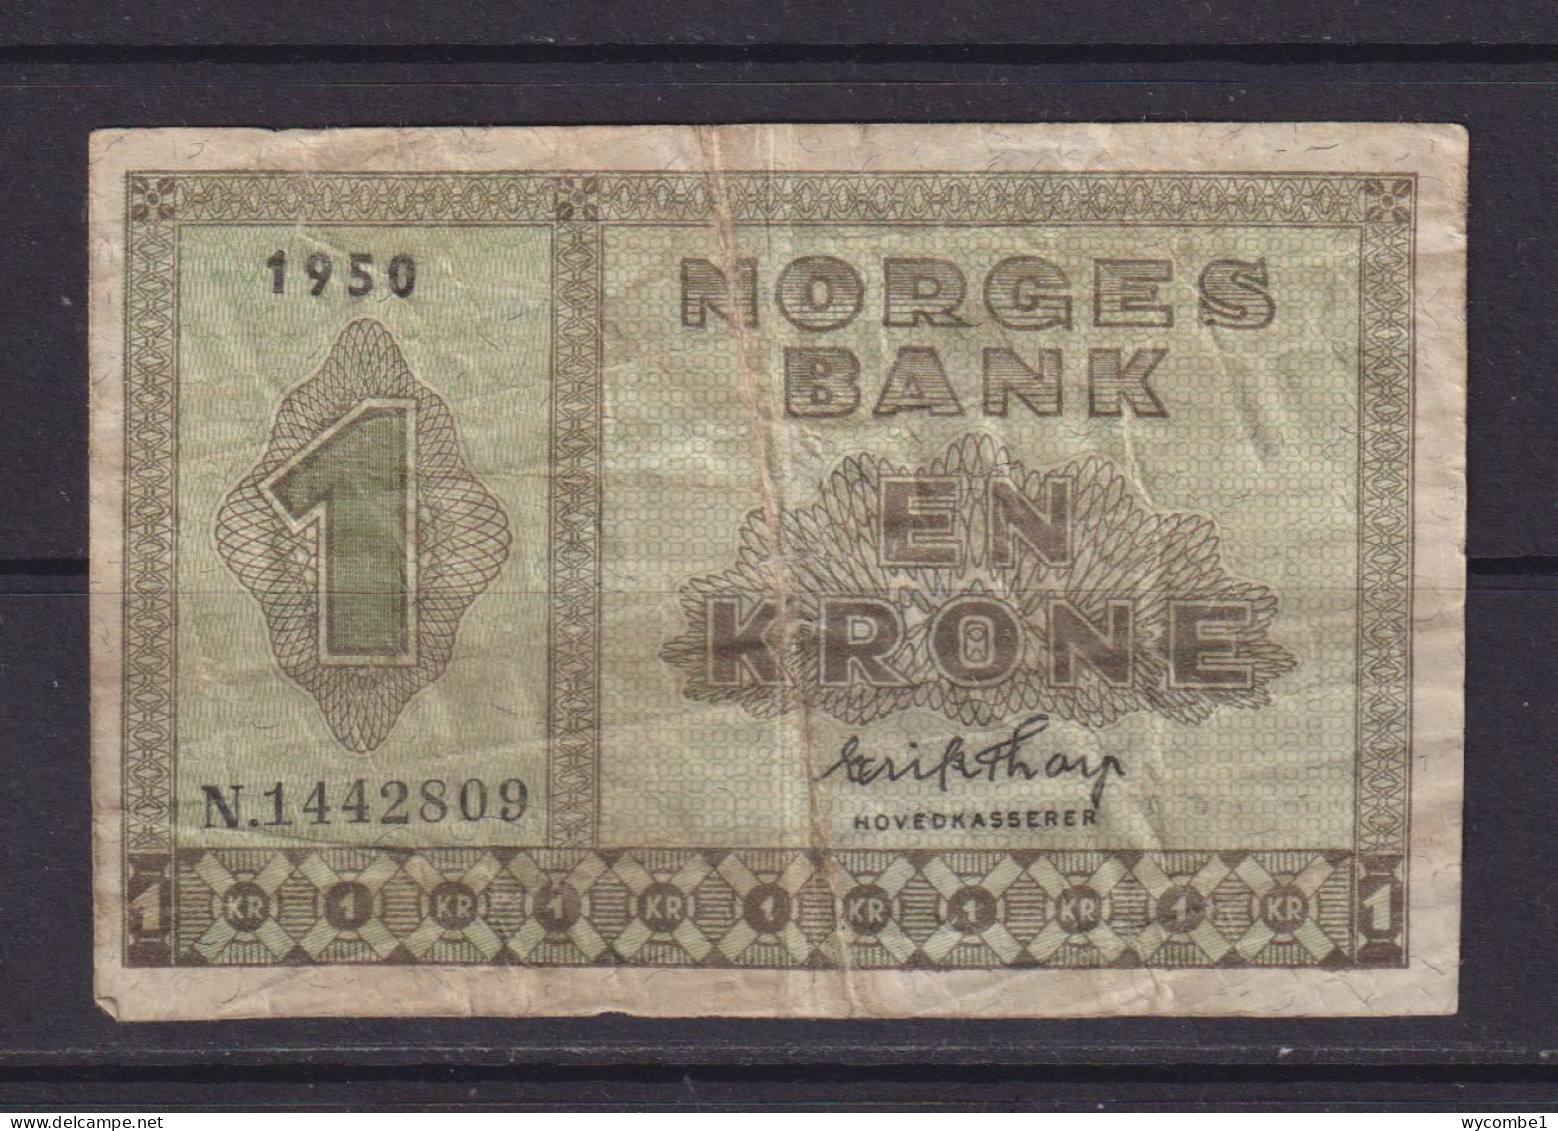 NORWAY - 1950 1 Krone Circulated Banknote - Noorwegen